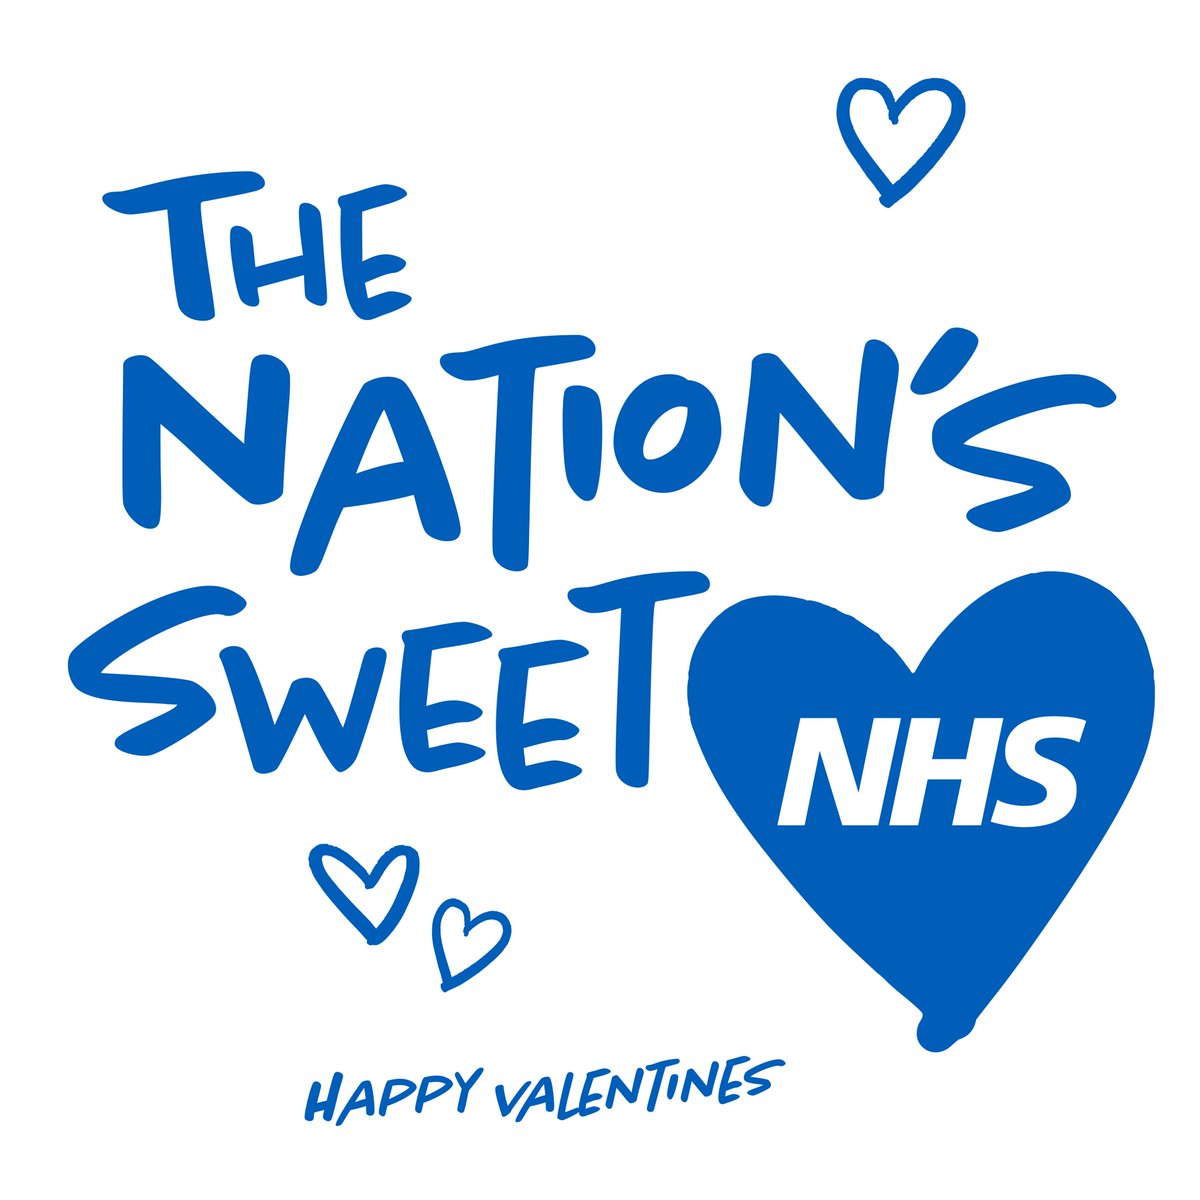 Everyones Valentine this year @OneMinuteBriefs, @LoveYourNHS @thortful #NHSValentines
@ChasingStigma @NHScharities